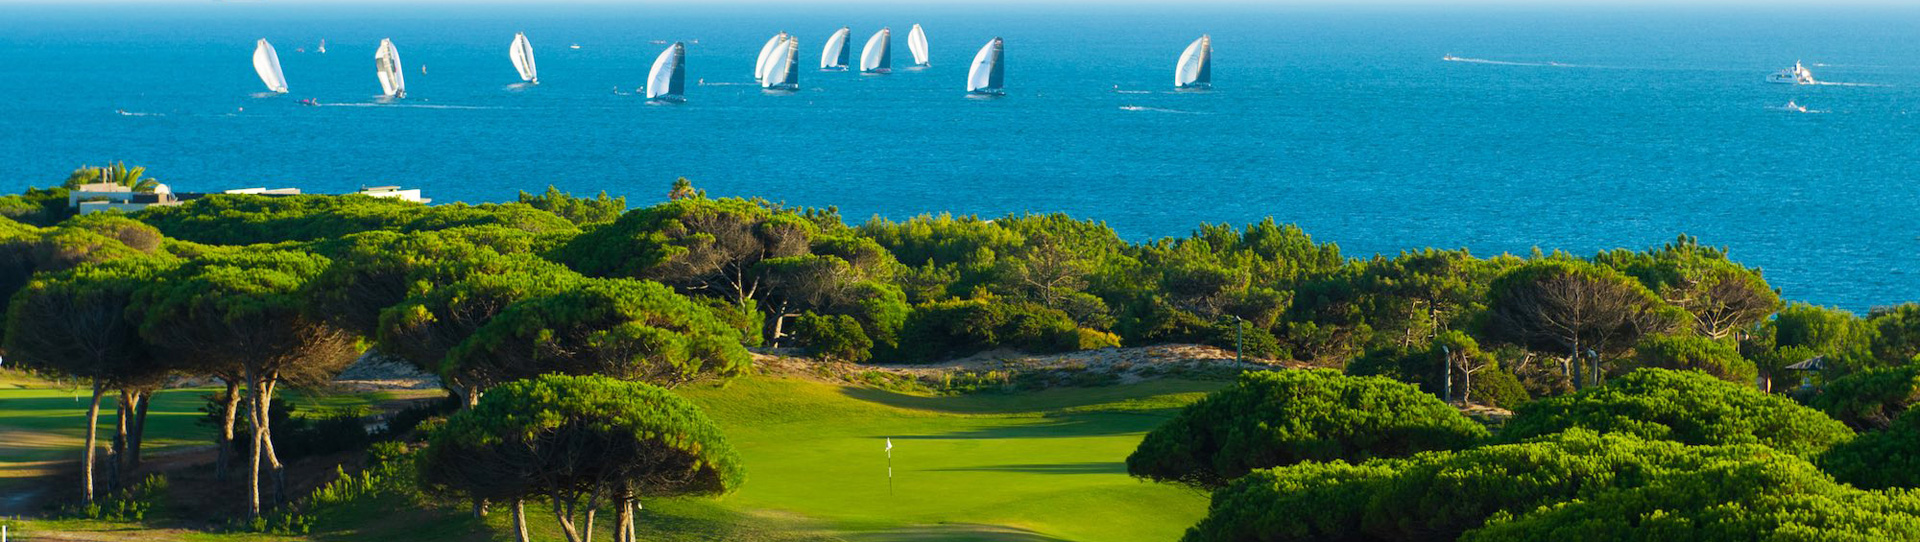 Portugal golf courses - Oitavos Dunes - Photo 1